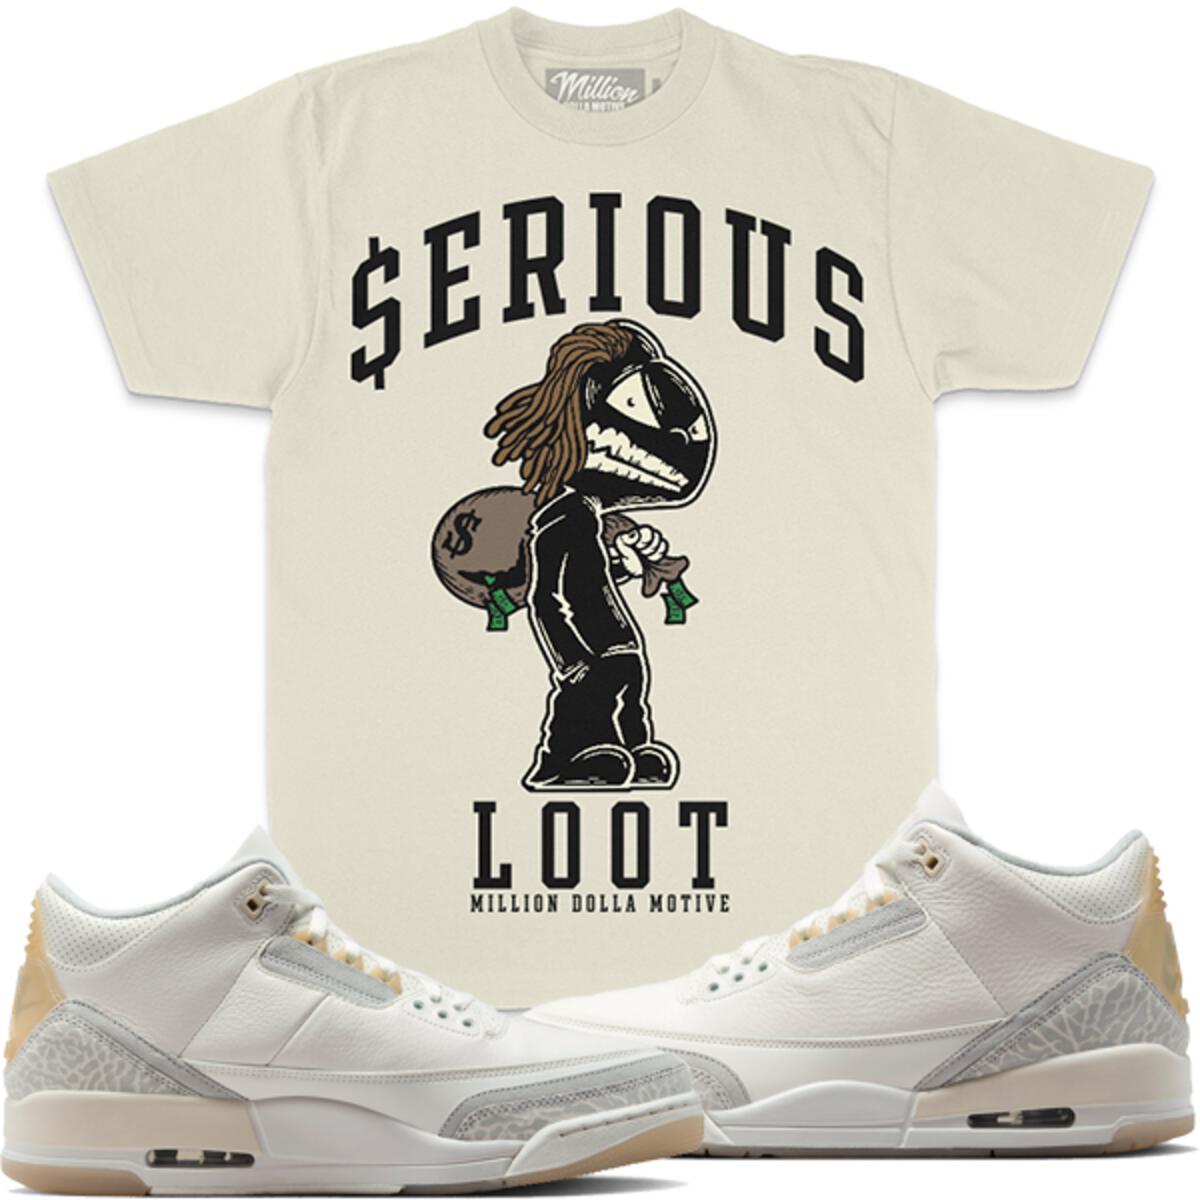 Serious Loot T-shirt